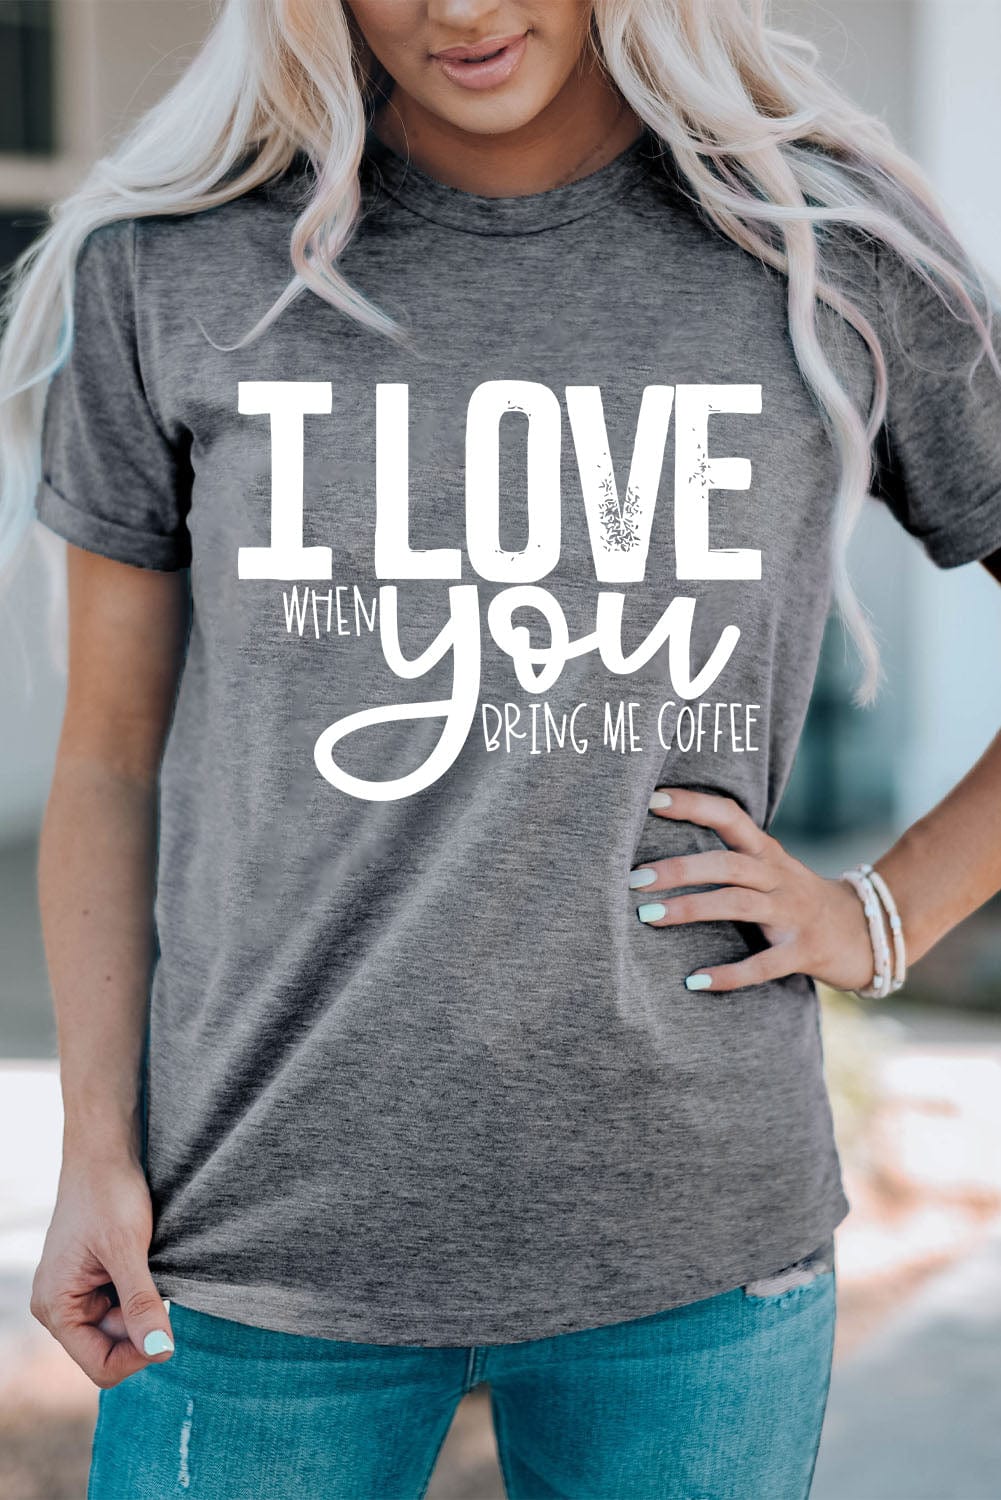 I LOVE YOU Crewneck T-Shirt - Body By J'ne